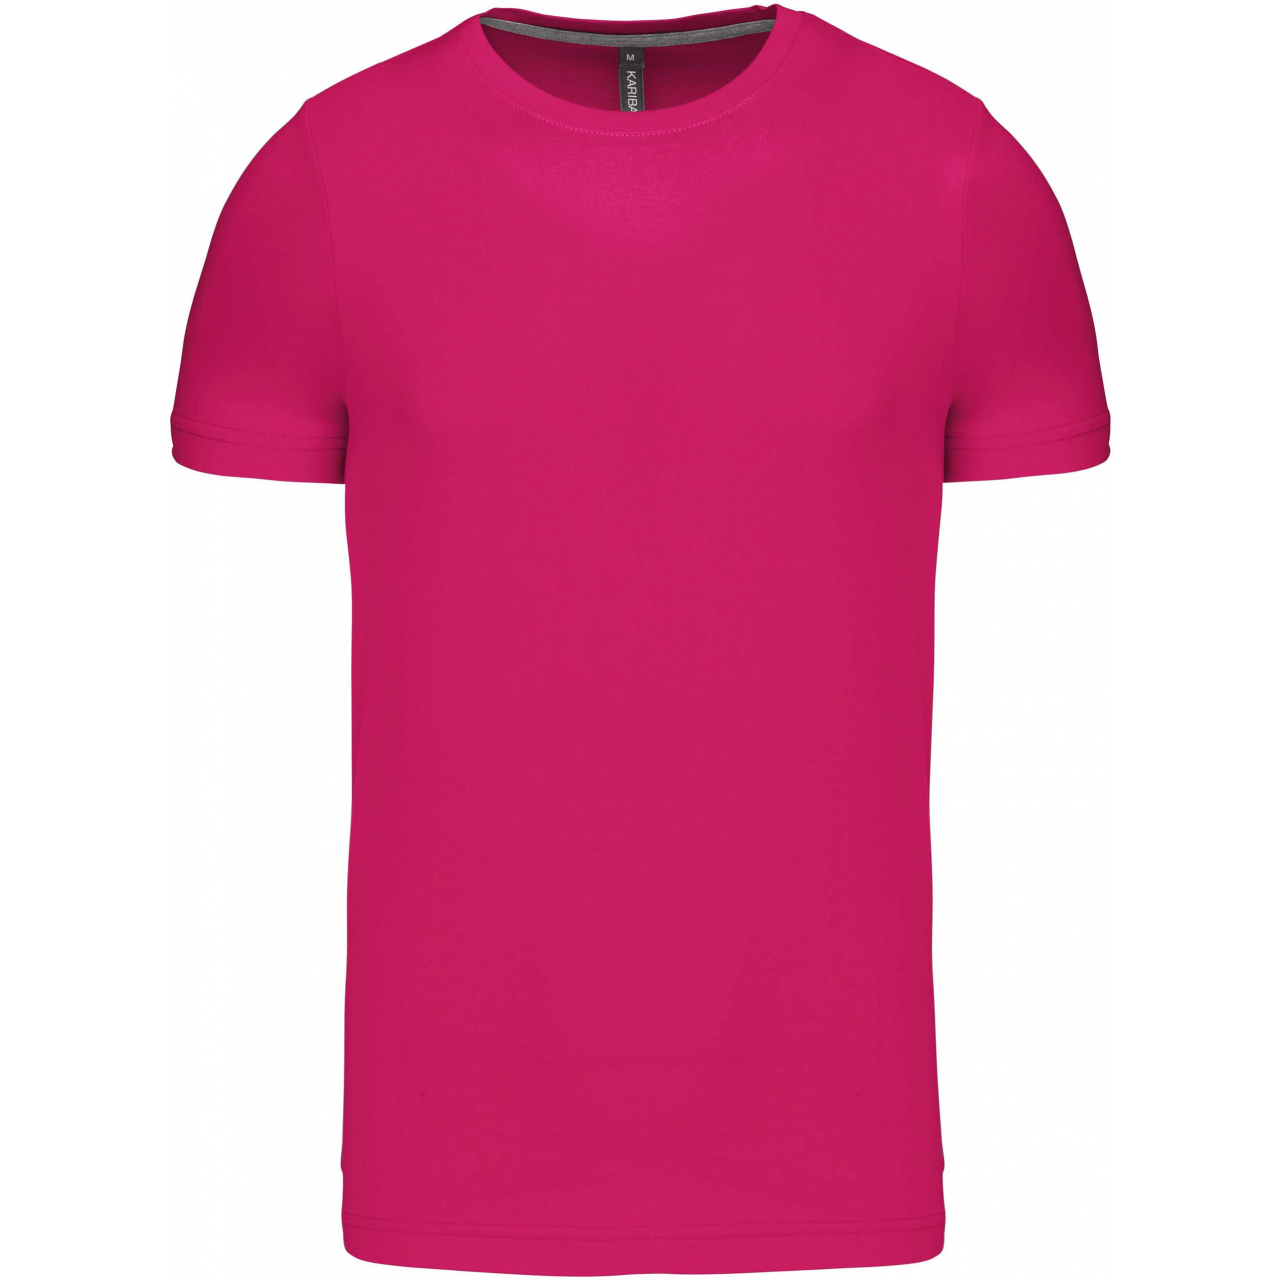 Pánské tričko Kariban krátký rukáv - růžové, M